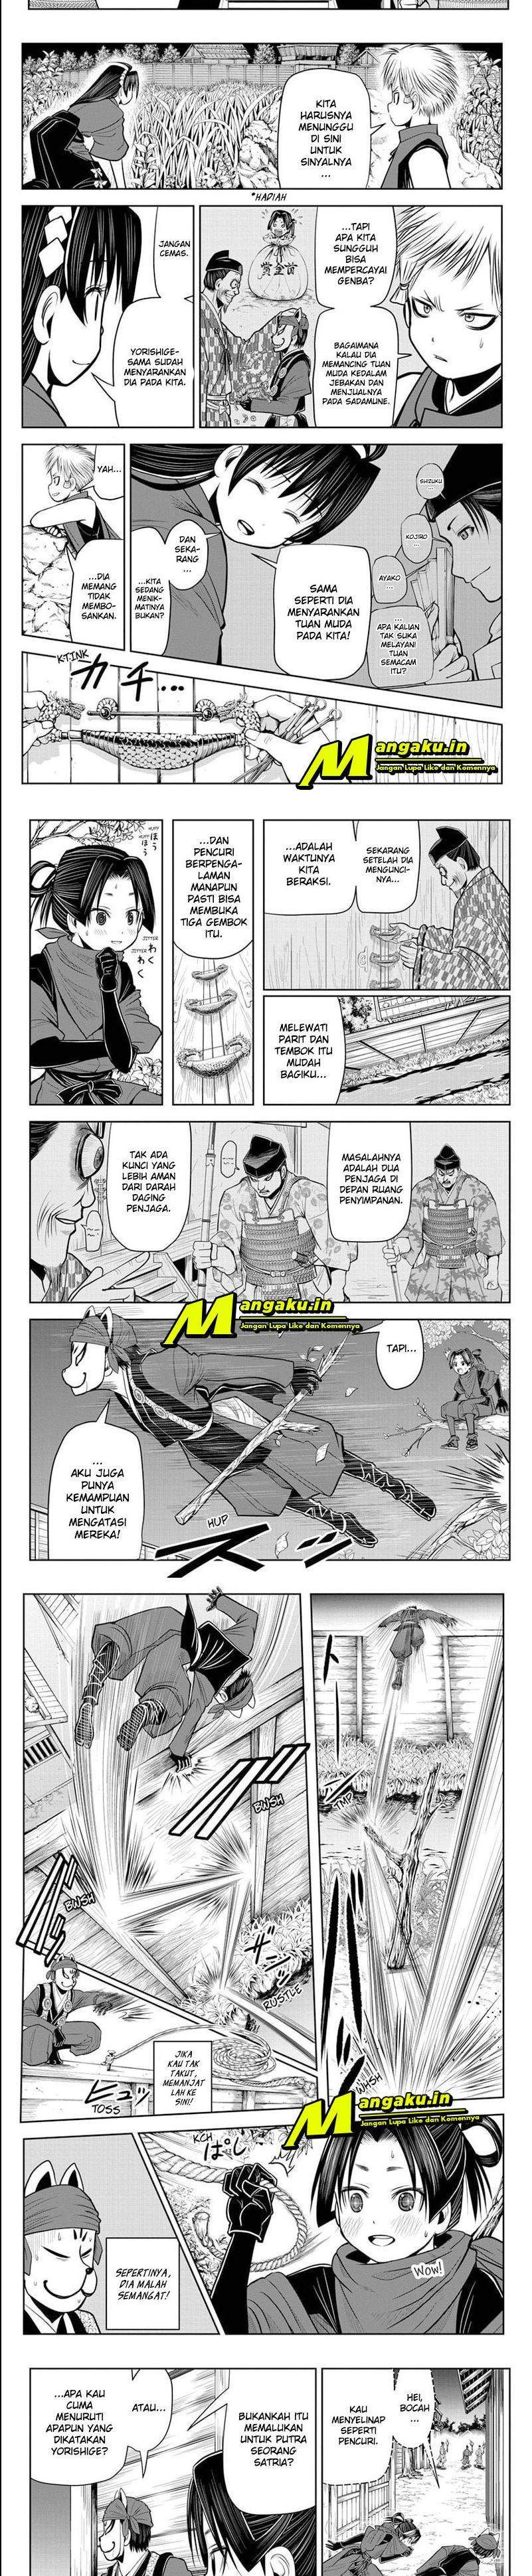 The Elusive Samurai Chapter 12 3